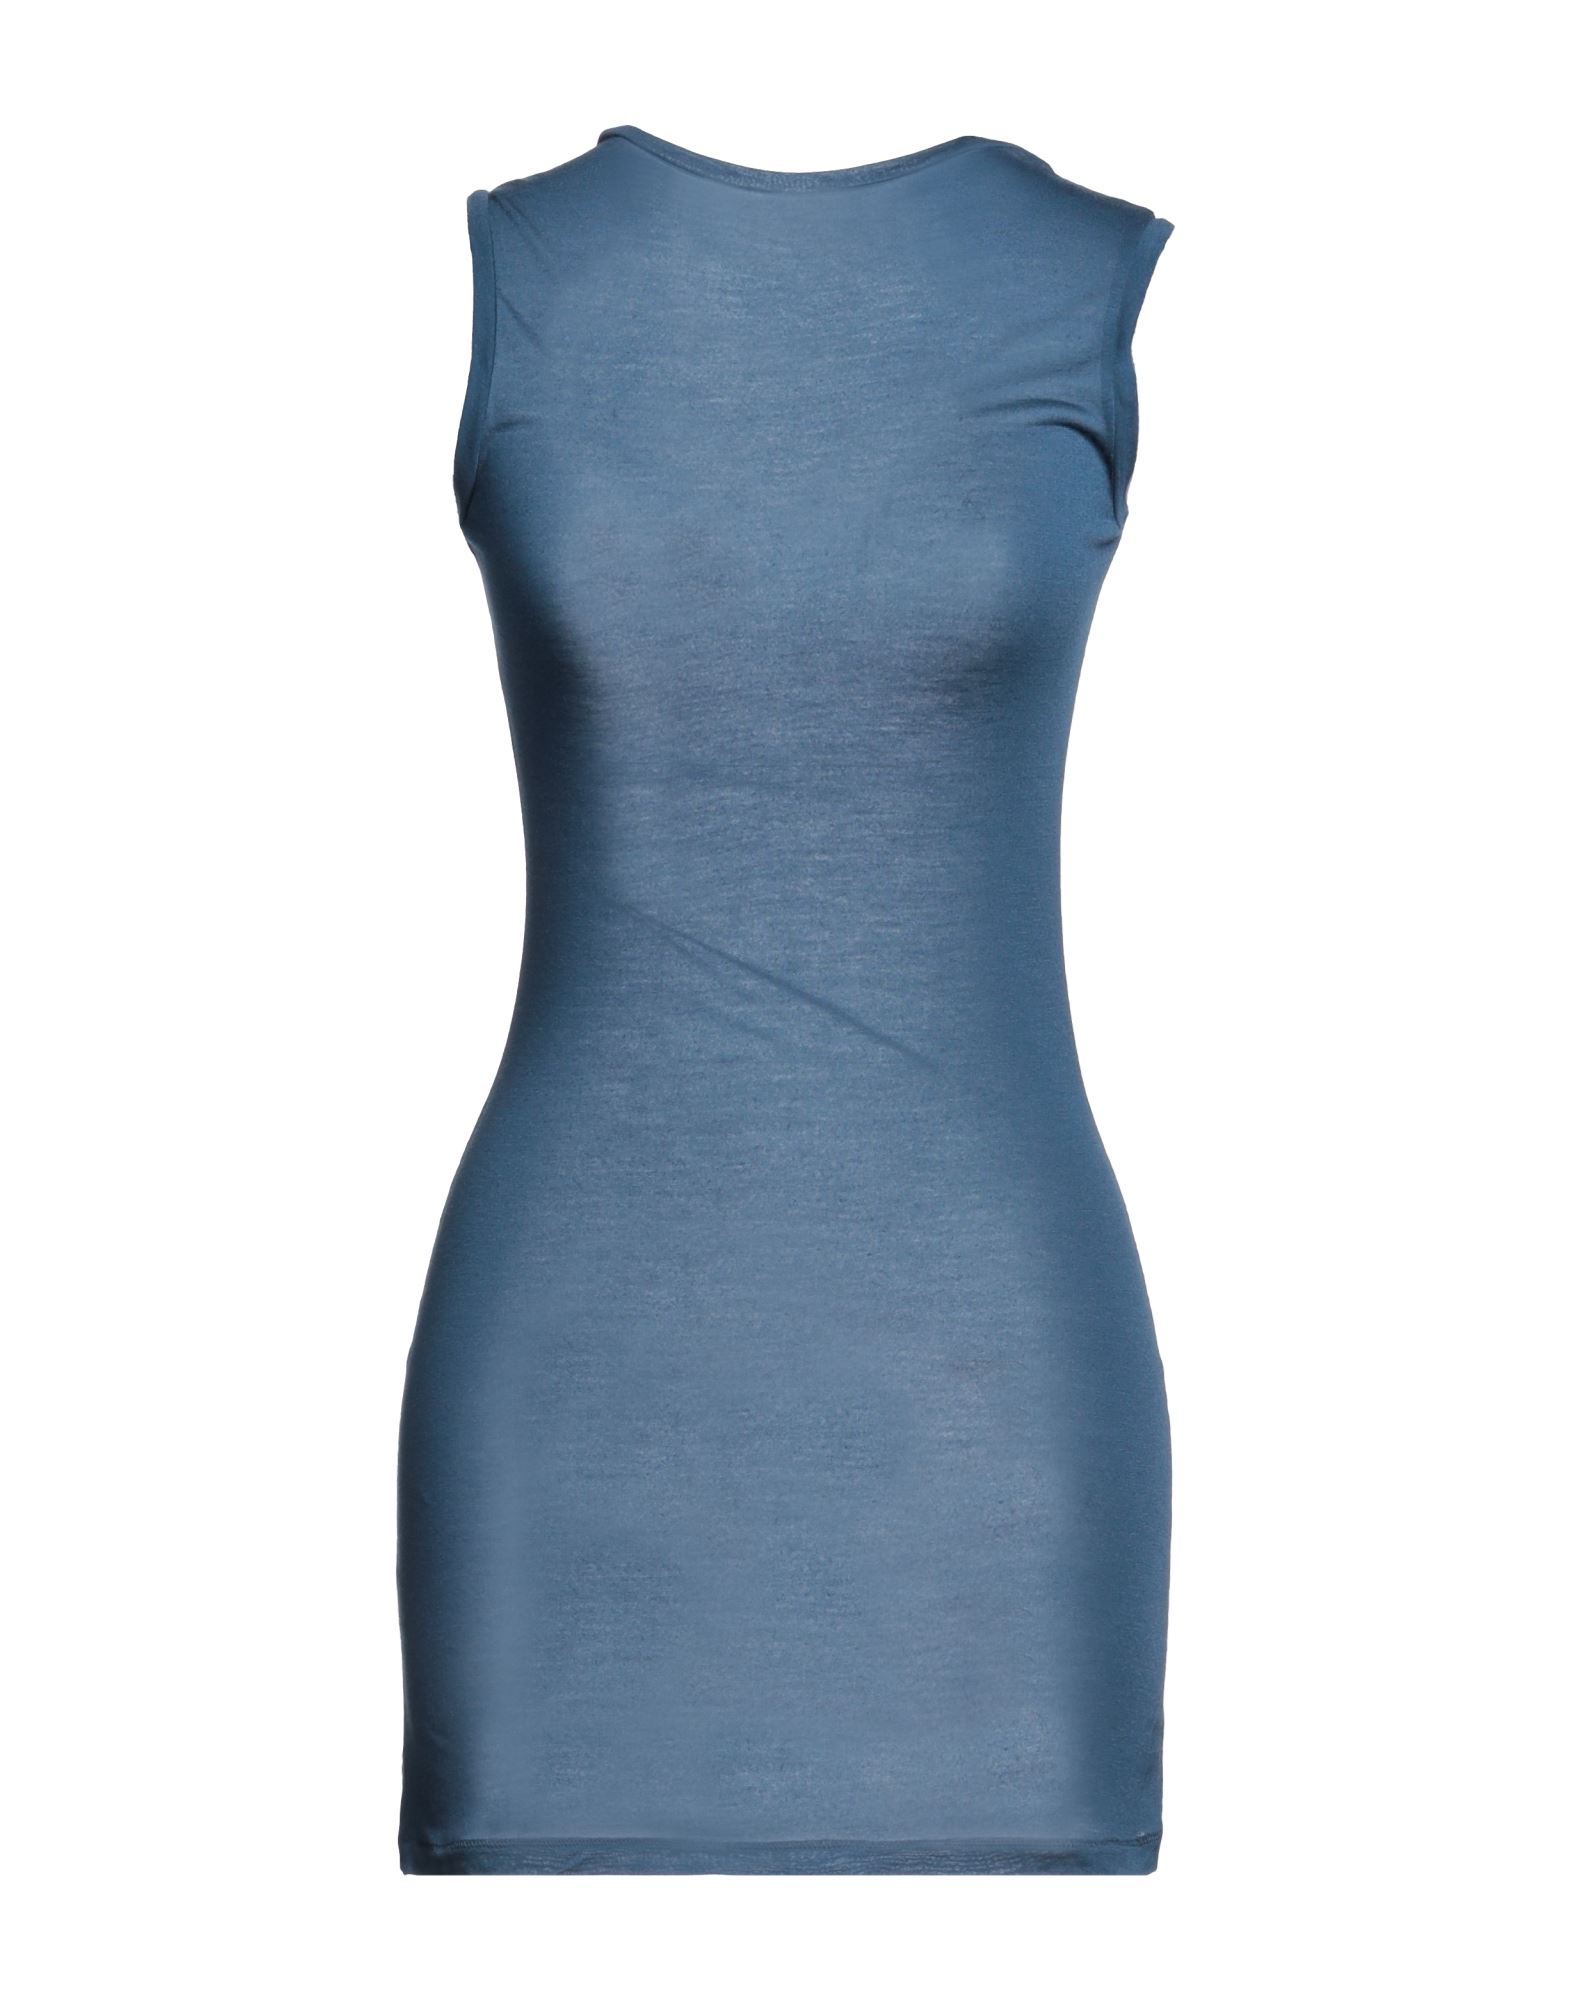 Alternative Woman T-shirt Slate Blue Size Xs/s Cotton